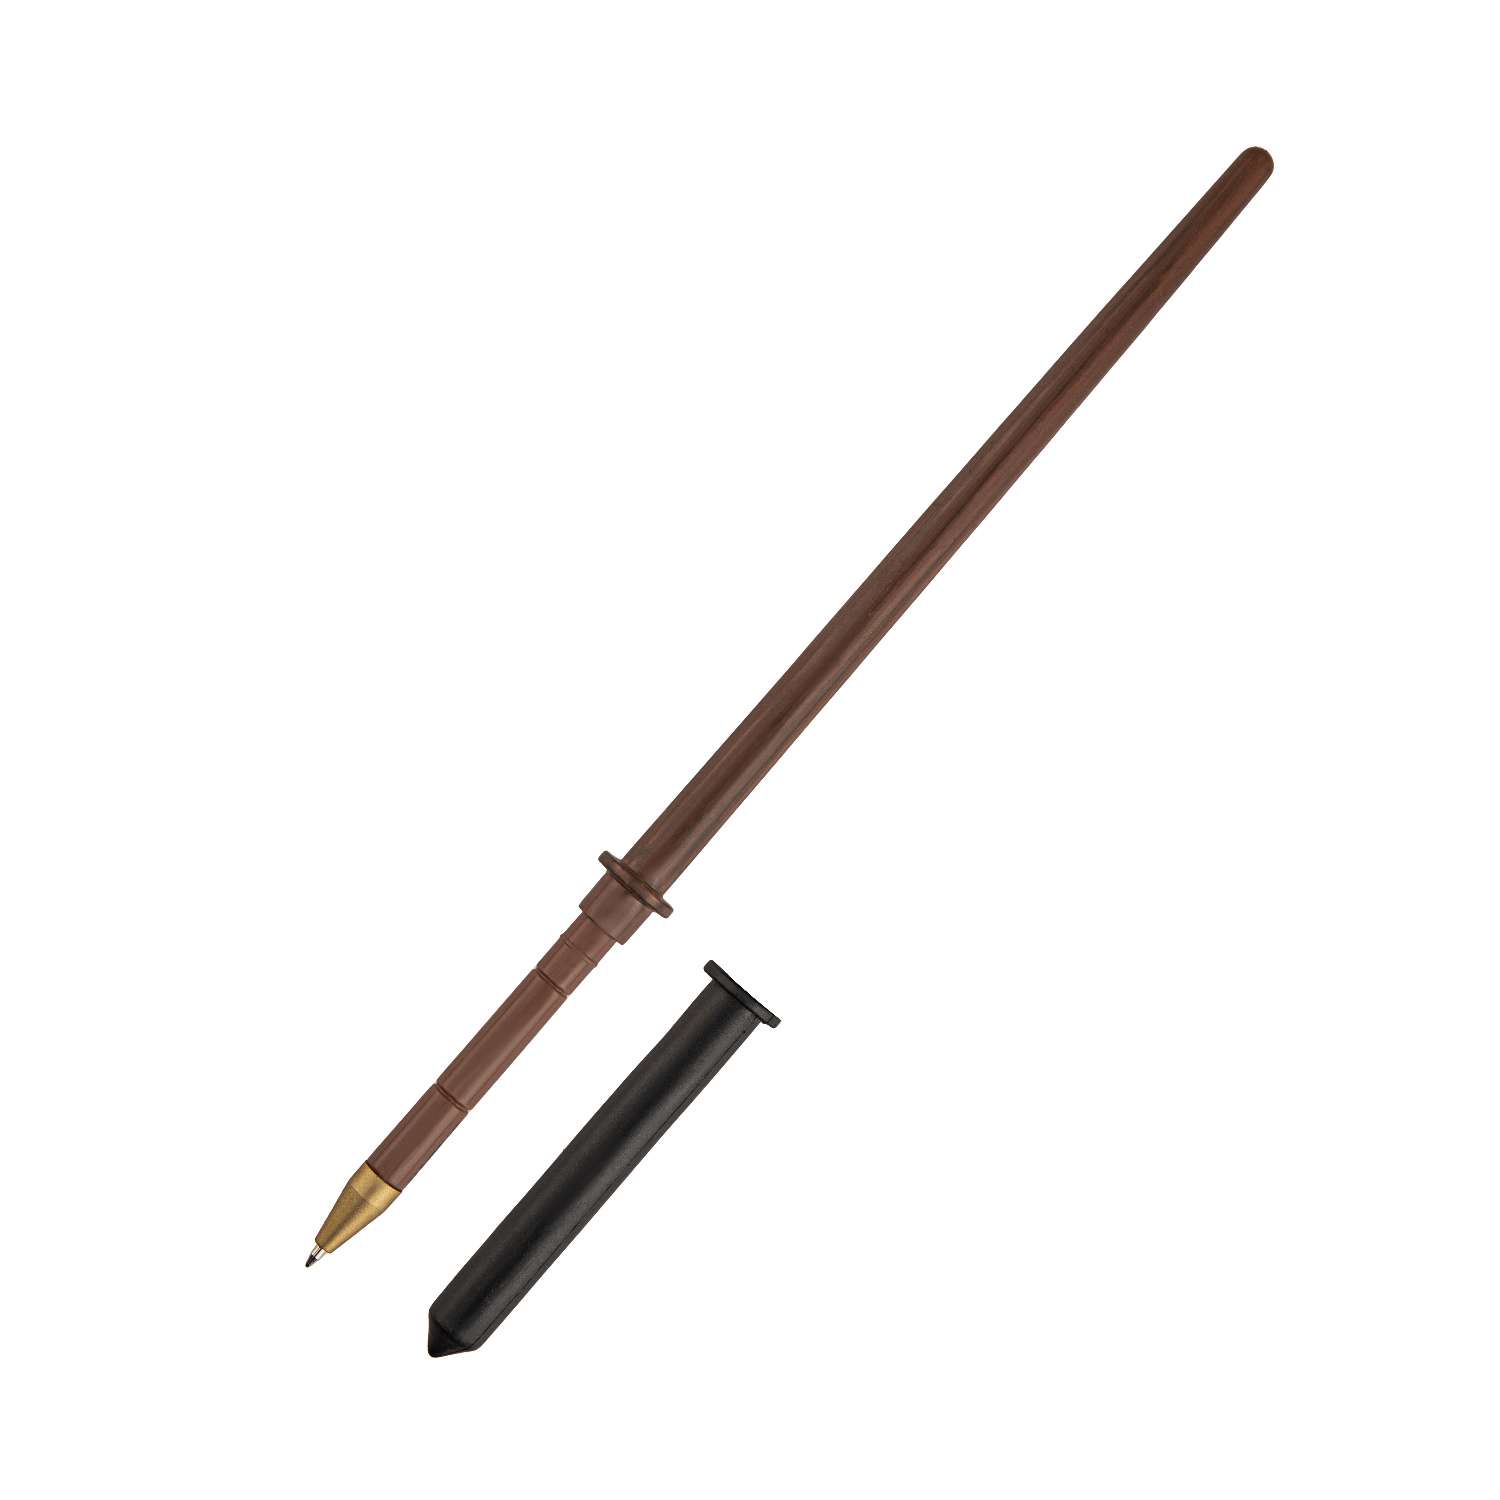 Ручка Harry Potter в виде палочки Драко Малфоя 25 см с подставкой и закладкой - фото 3